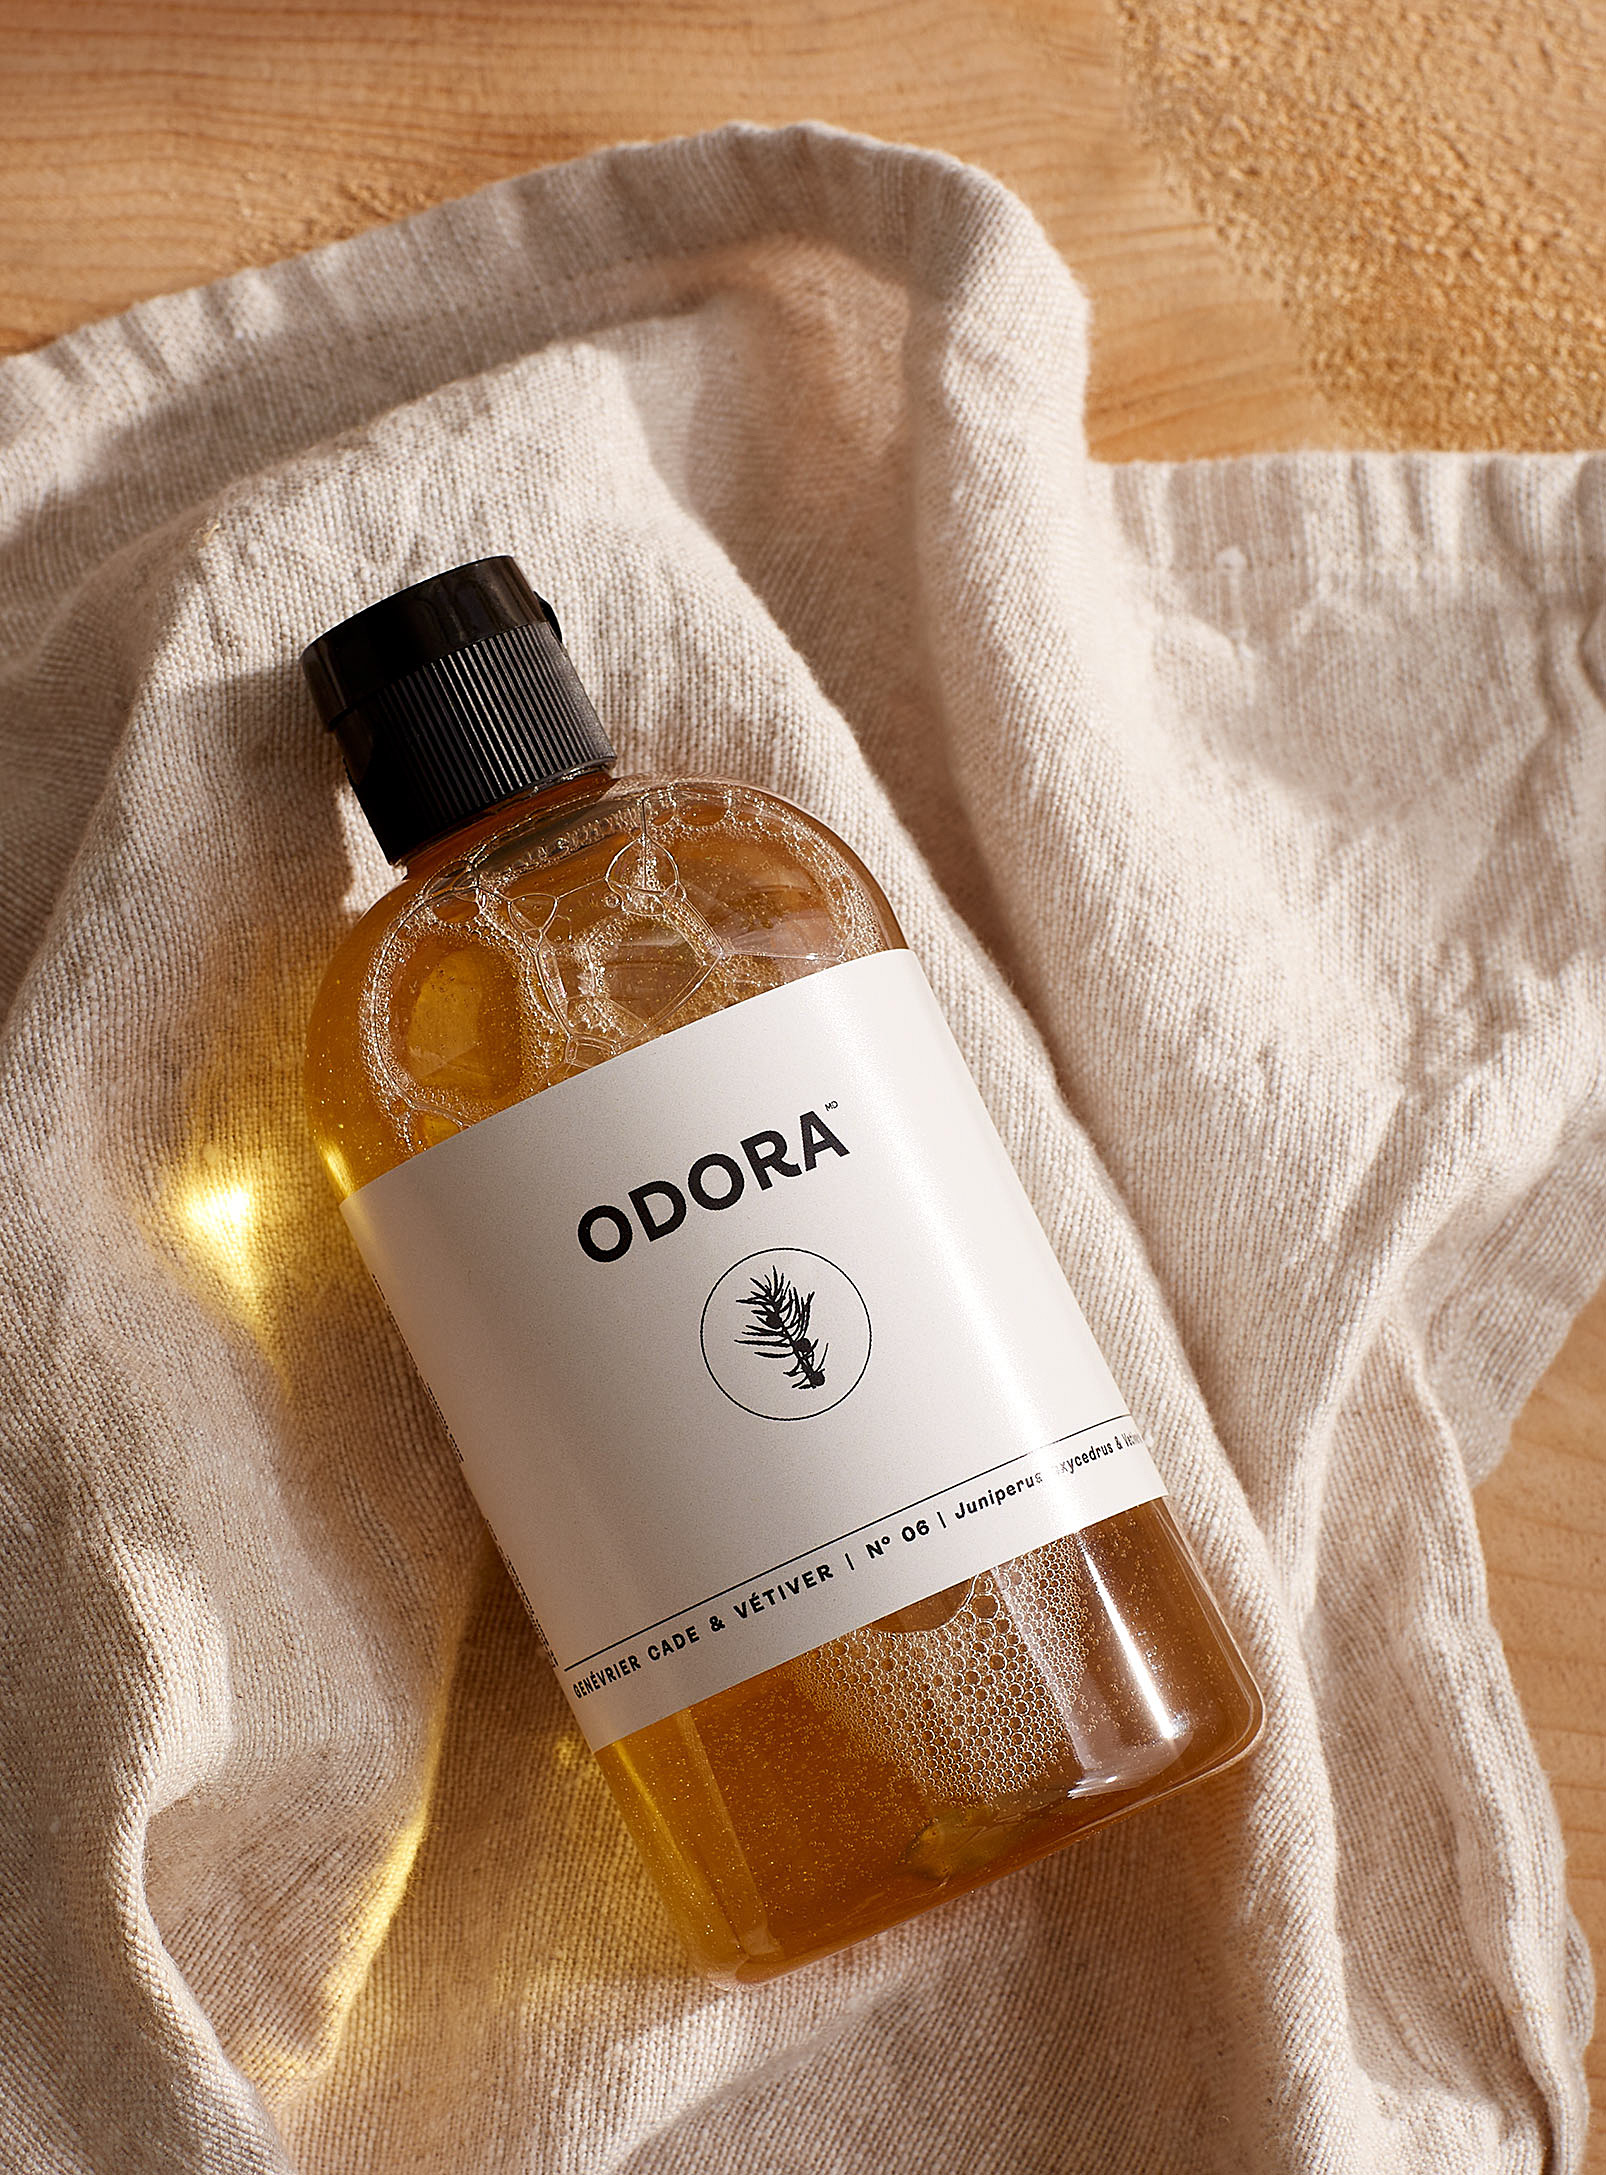 Odora - Souvenir des bois home fragrance